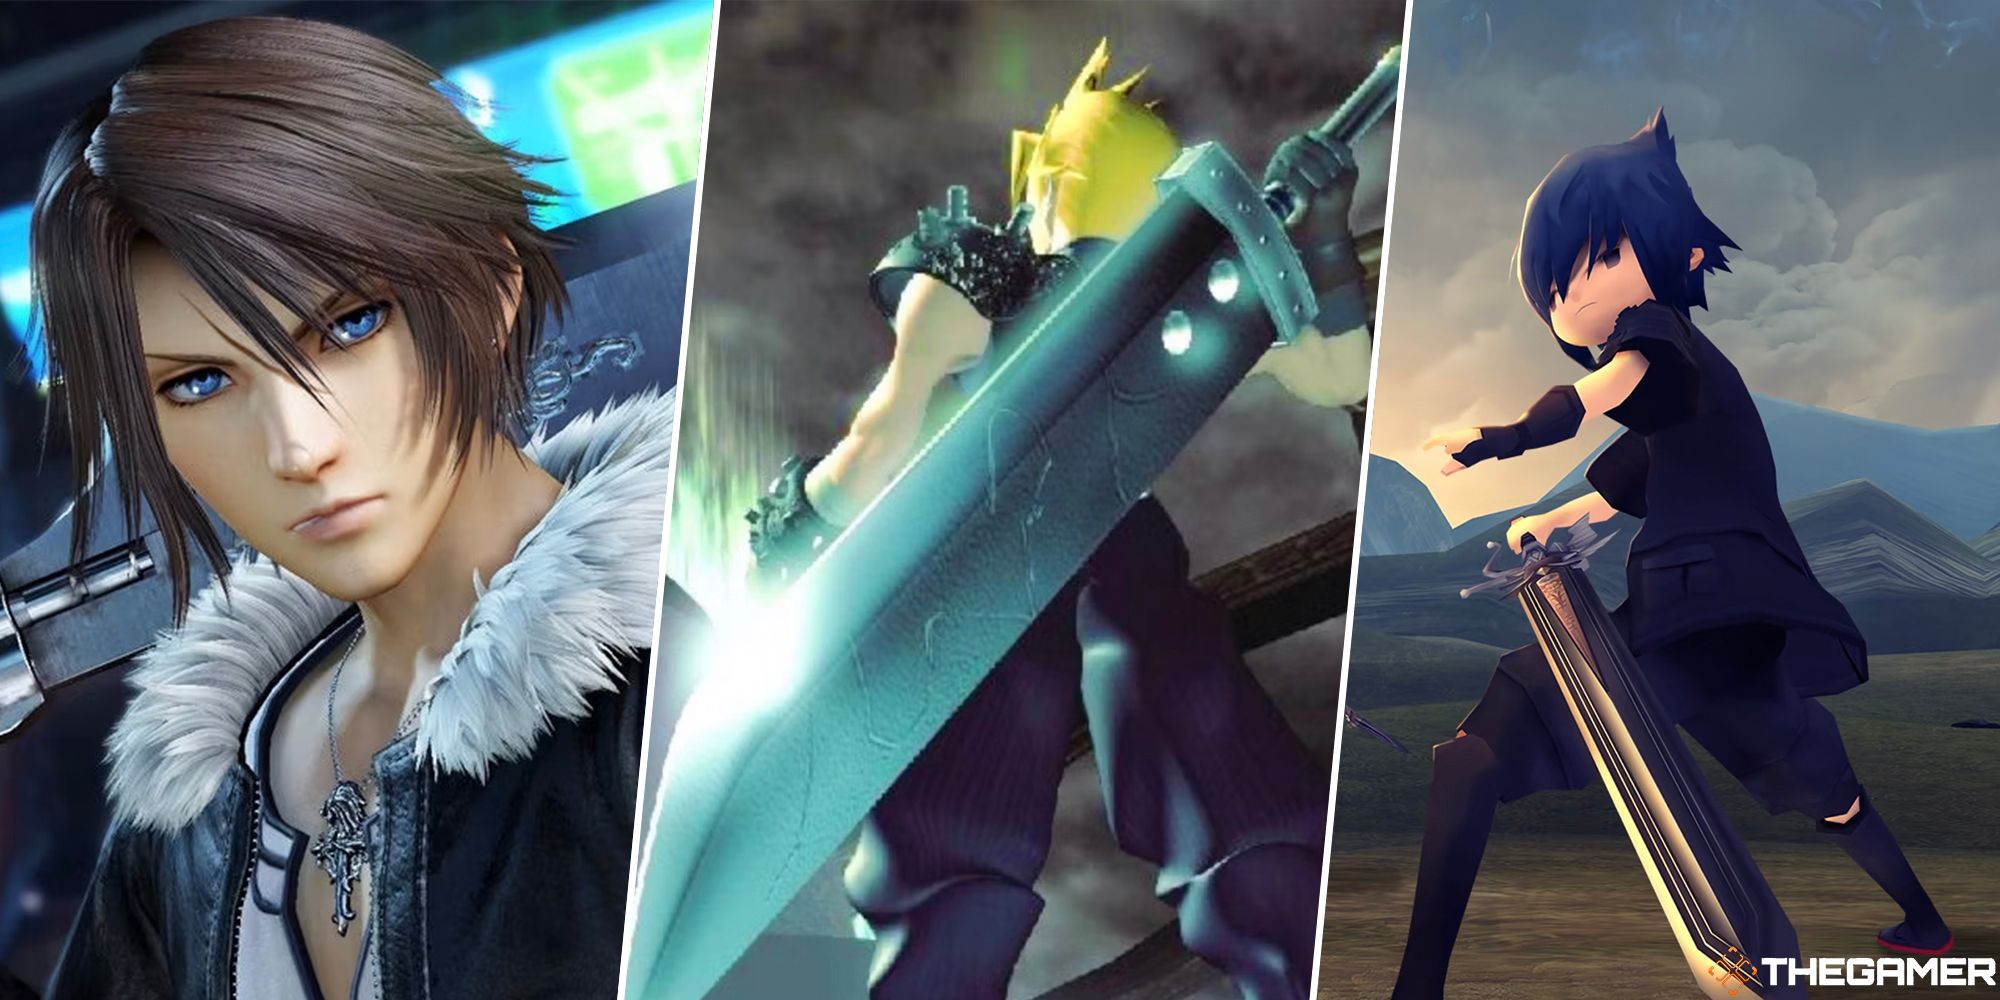 Final Fantasy 8 Squall, Final Fantasy 7 Cloud, and Final Fantasy 15 Pocket Edition Noctis split